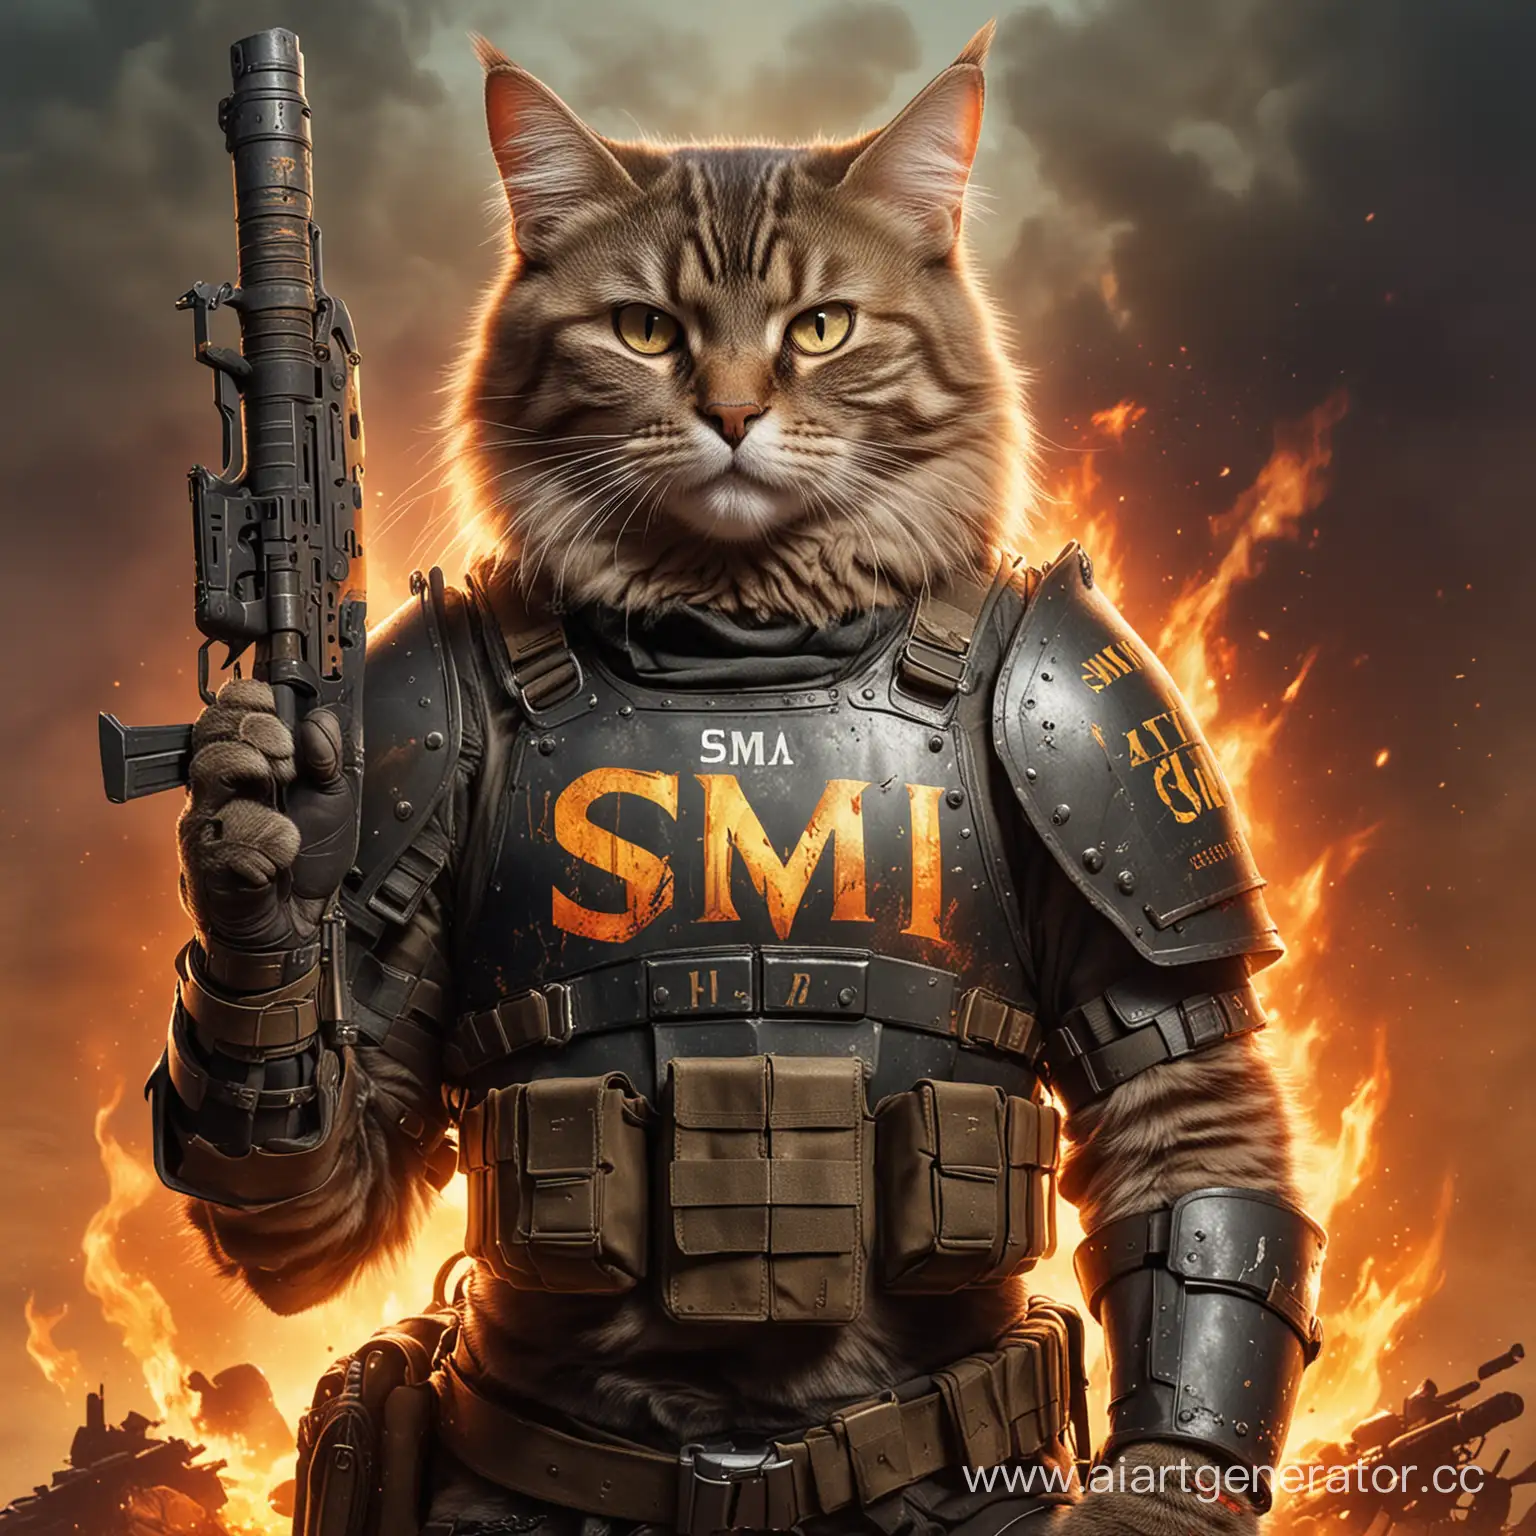 Fierce-Cat-Warrior-in-Combat-Armor-with-Fiery-Background